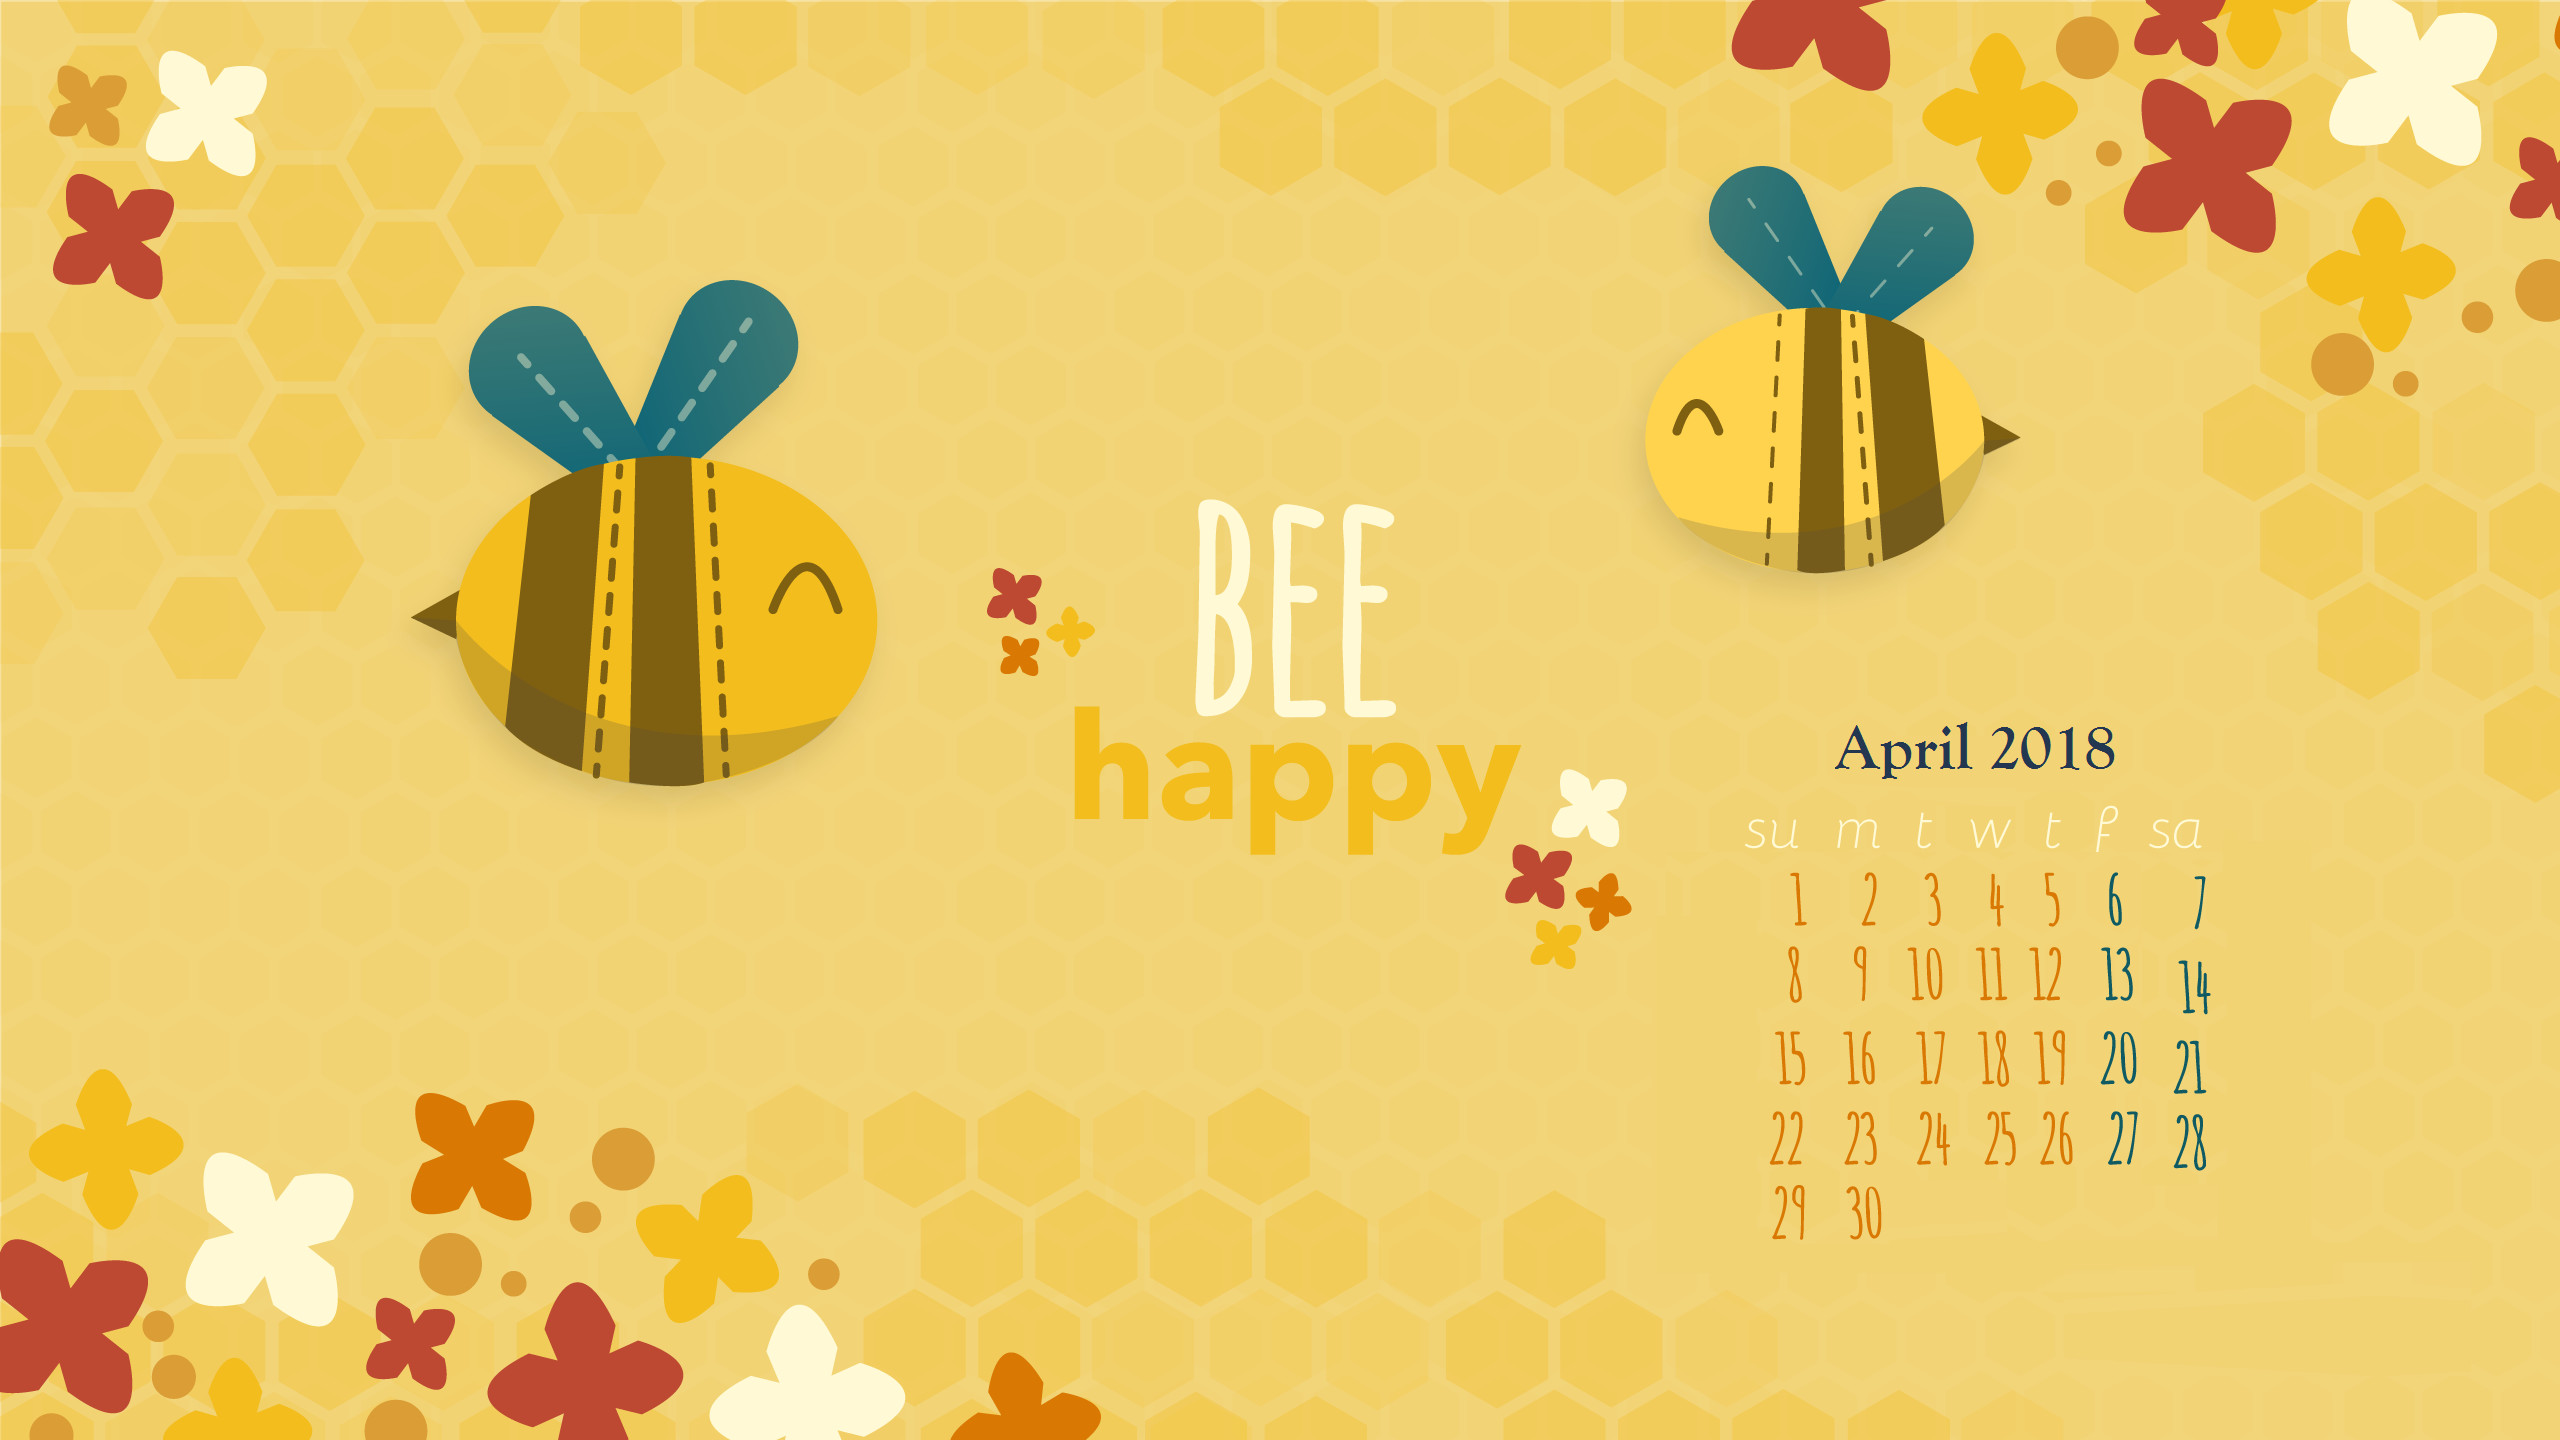 2560x1440 April 2018 Digital Artwork Calendar Bee Happy April 2018 iPhone Calendar